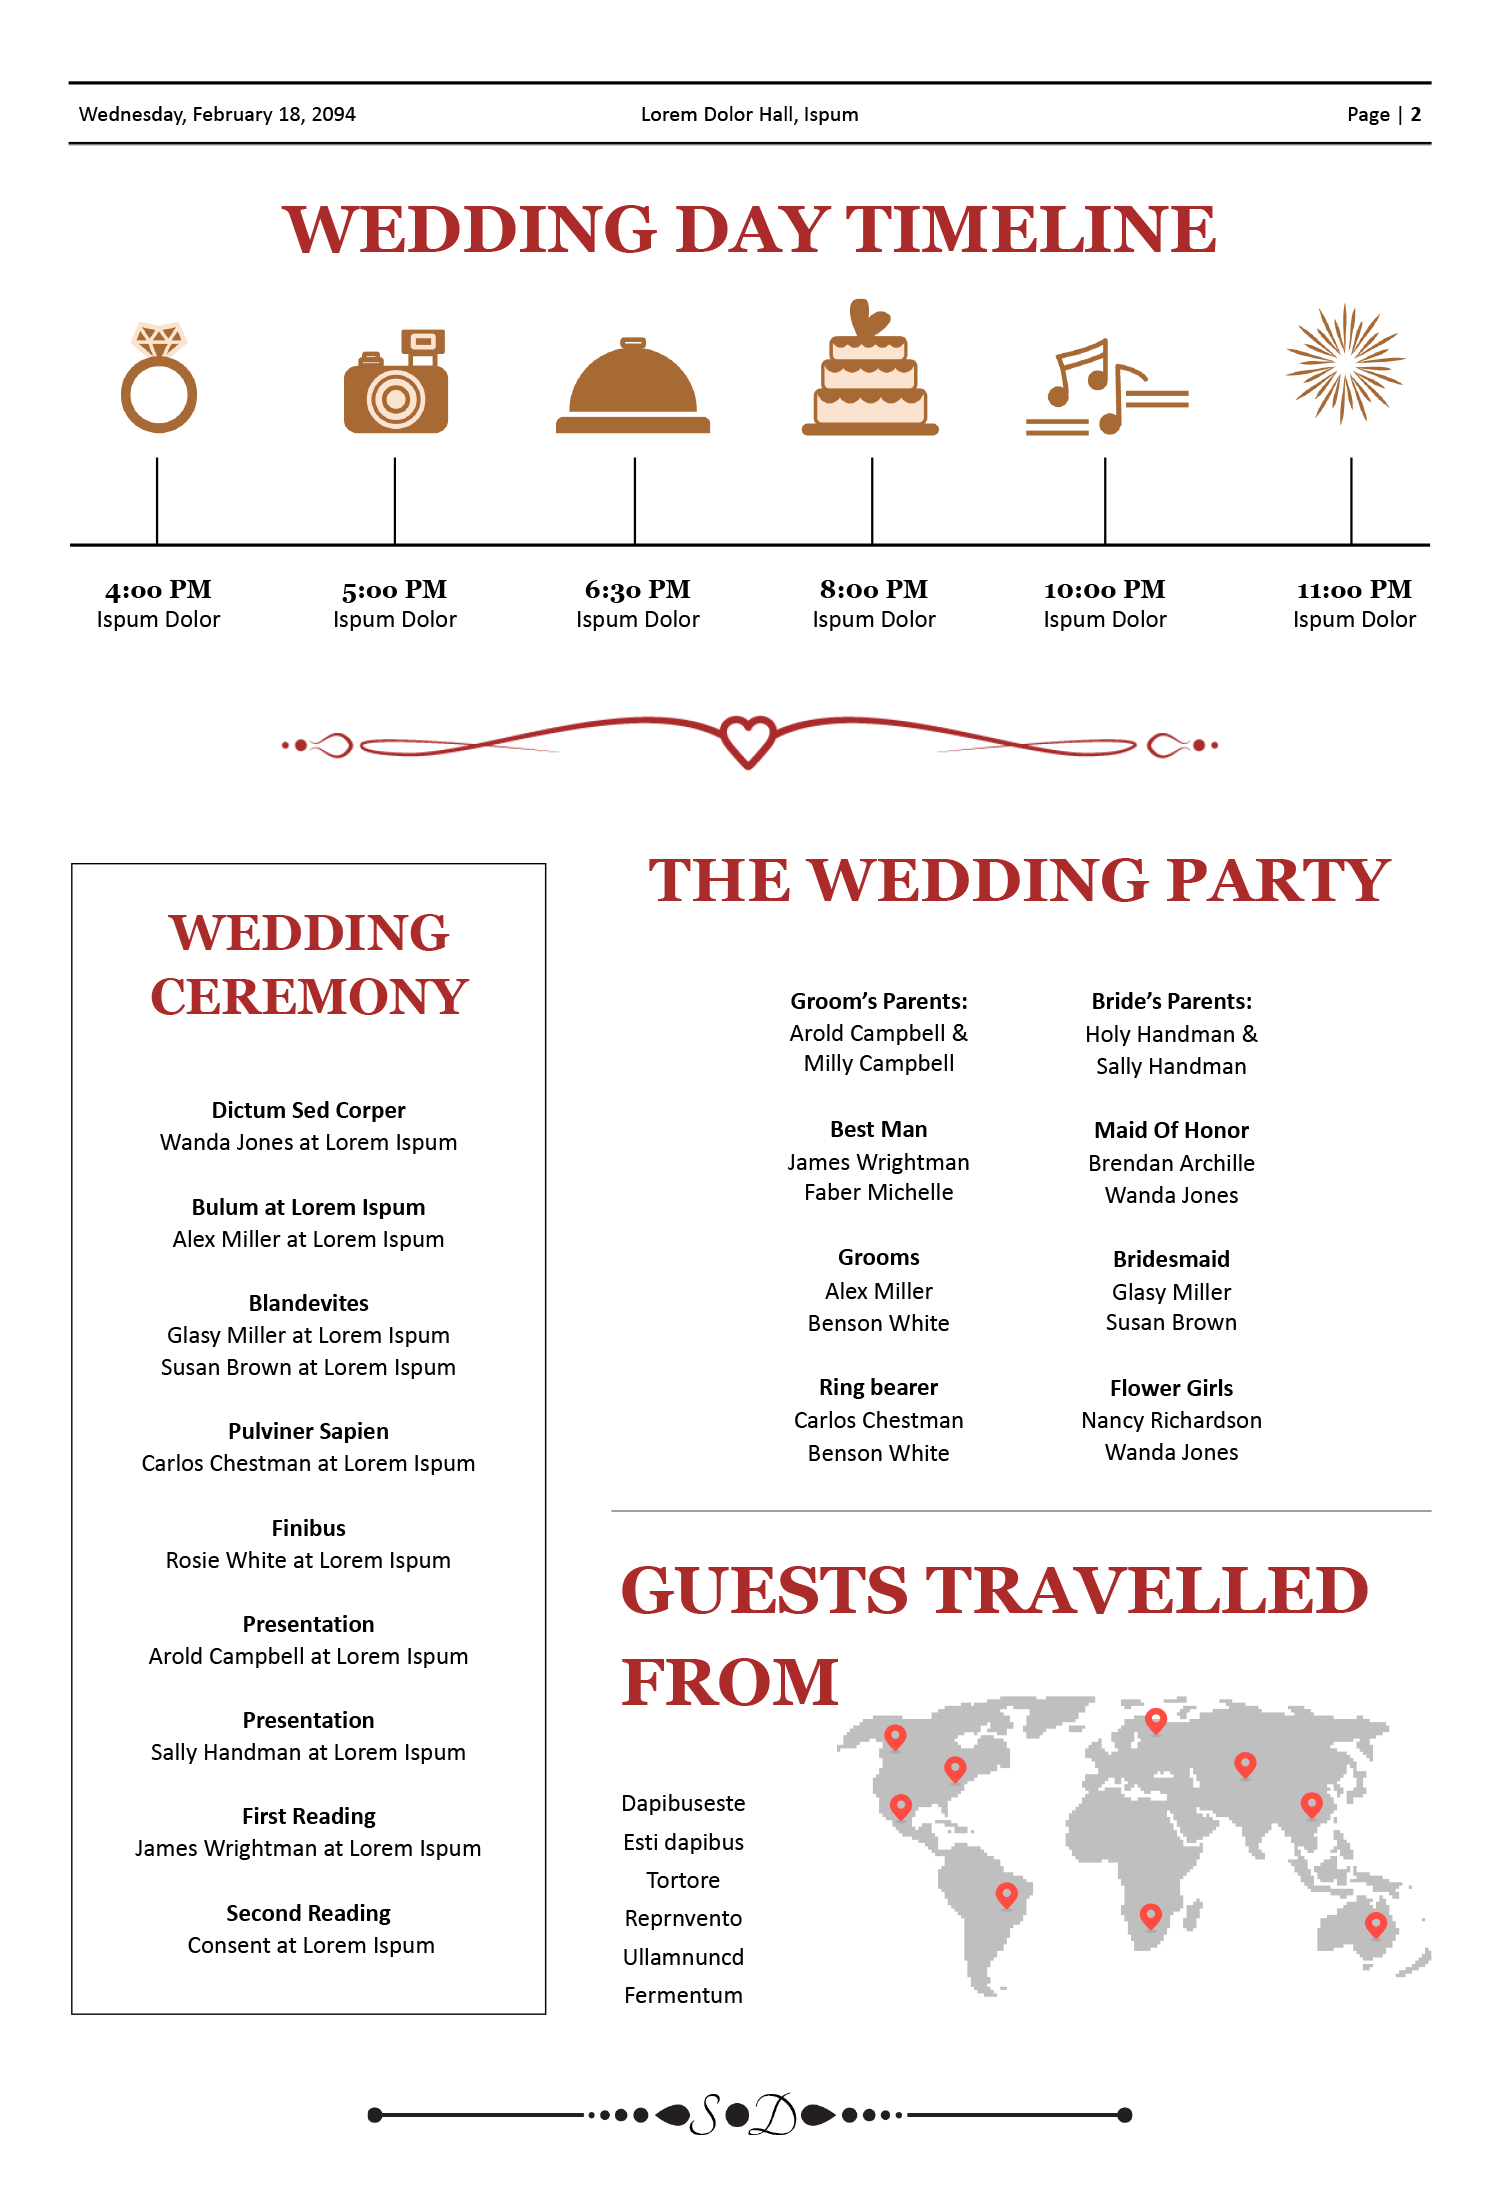 Broadsheet Wedding Newspaper Template - Page 02